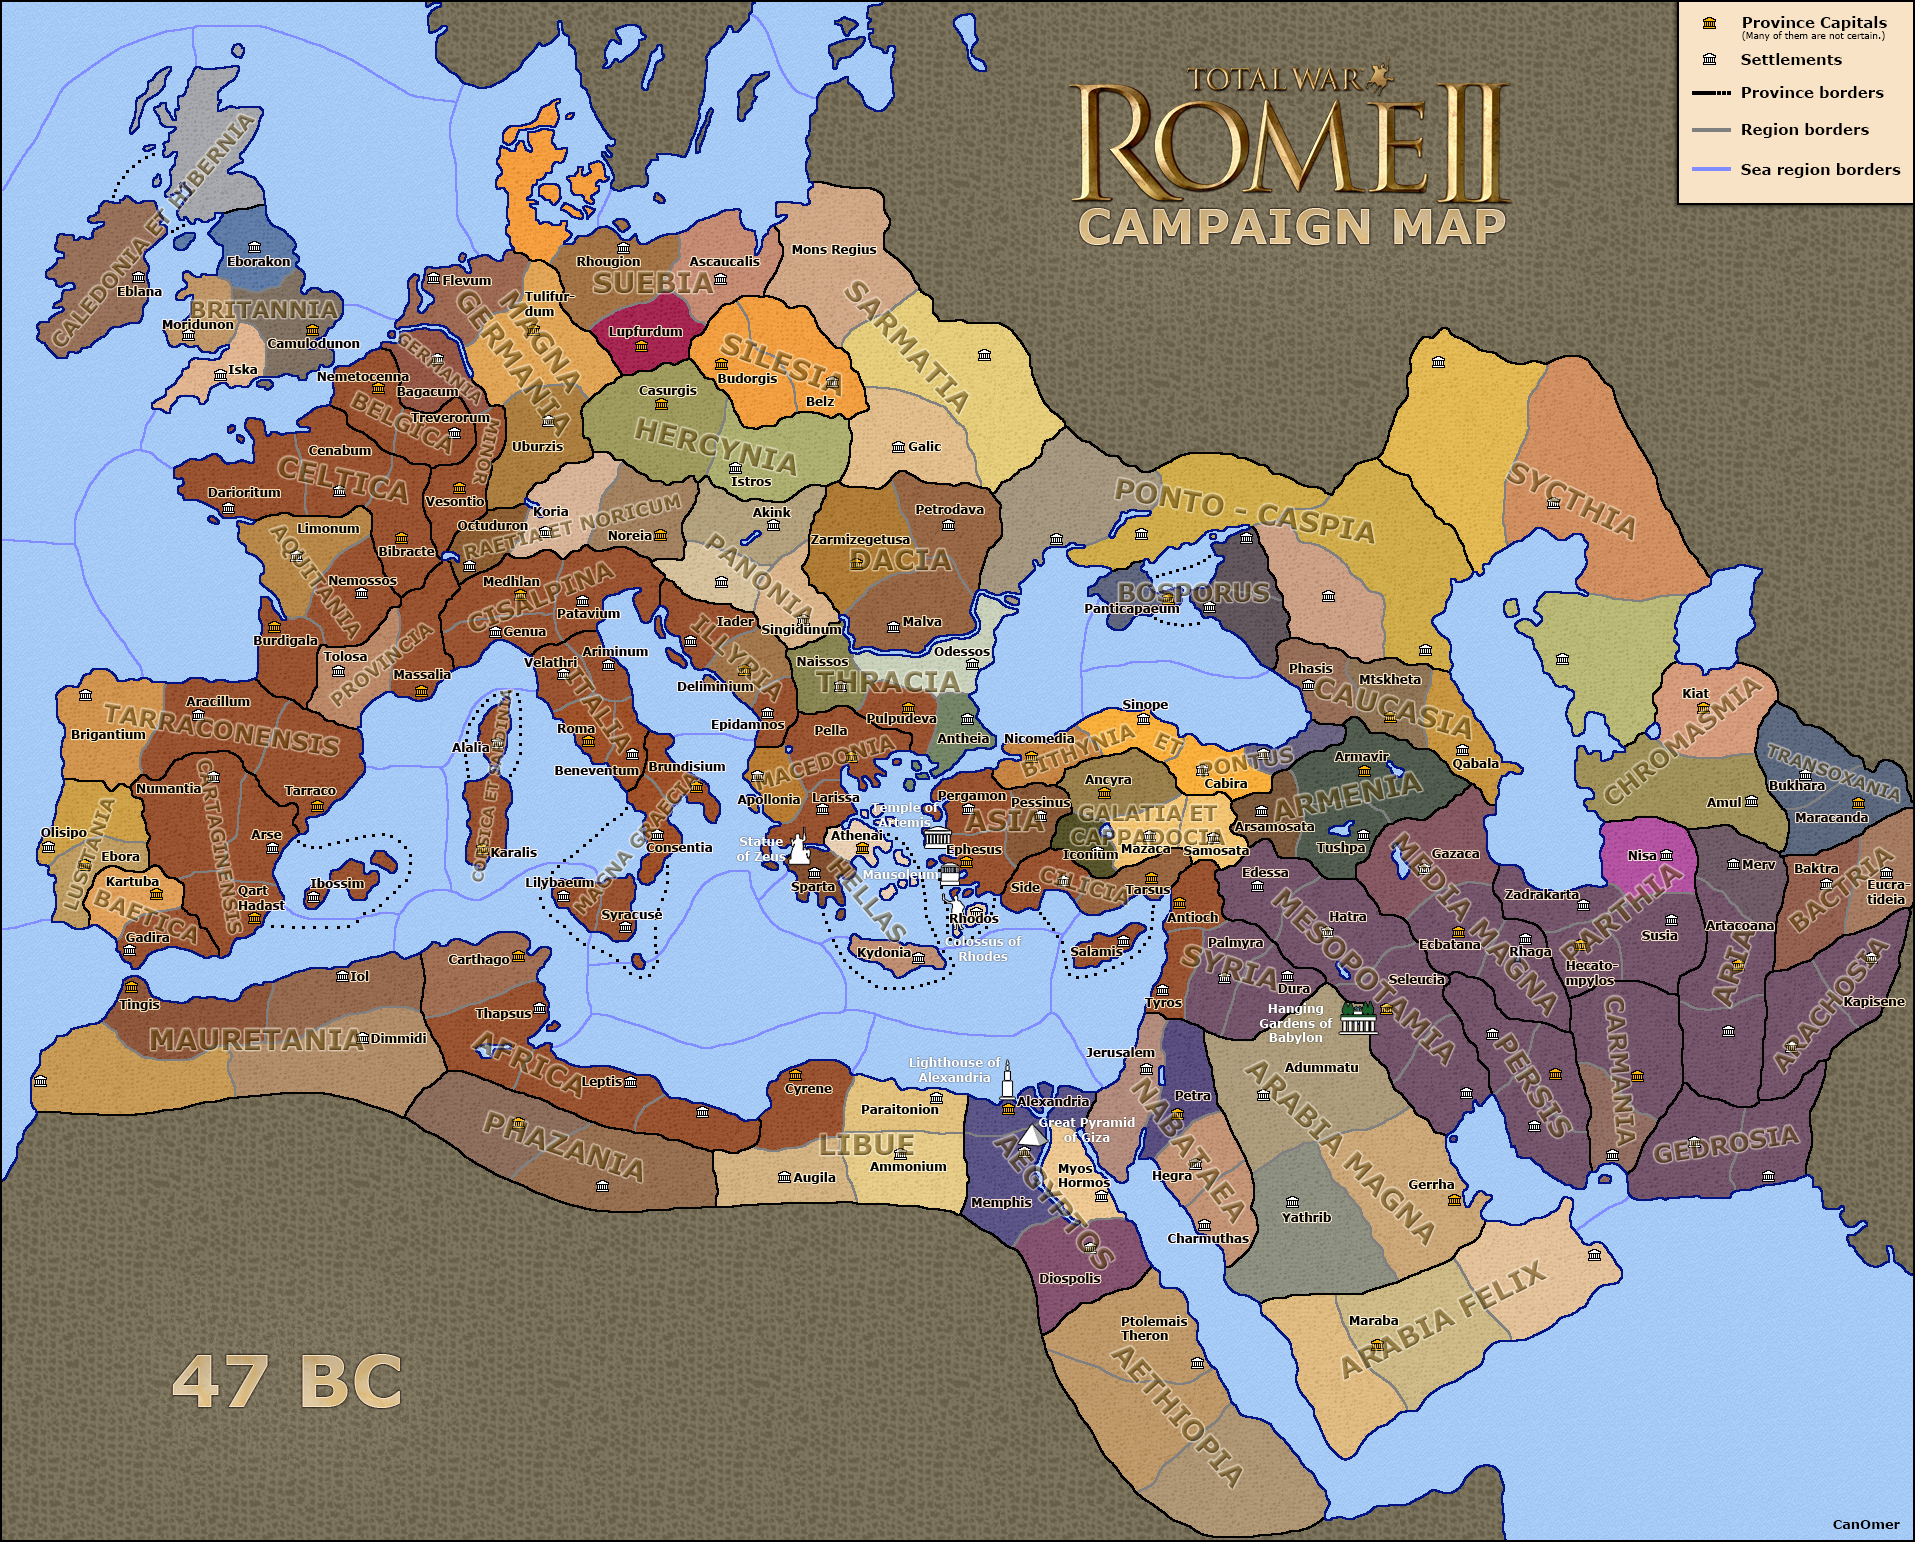 Total War: Rome II #11